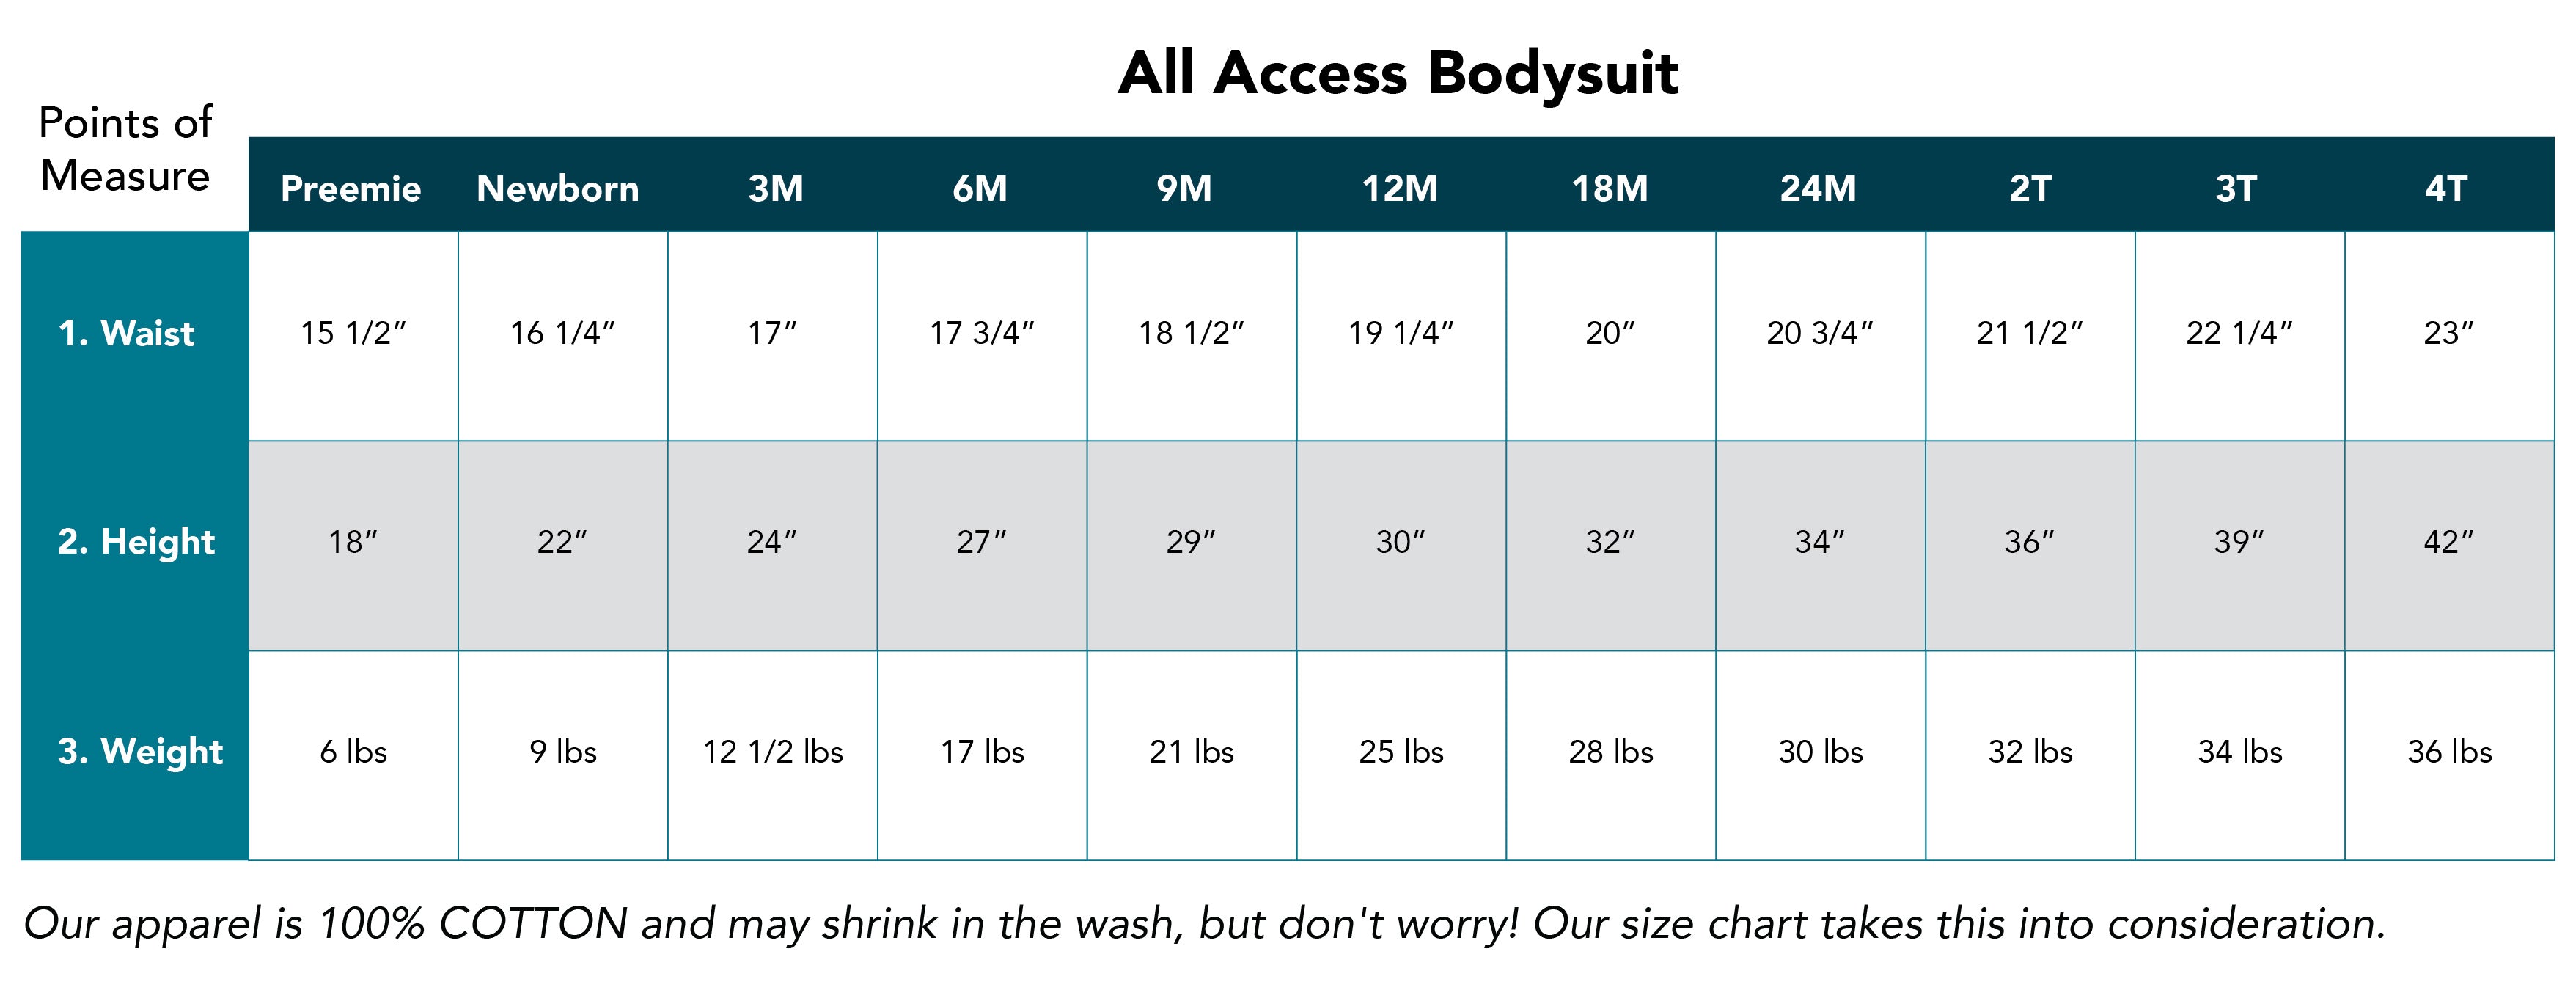 Gray All-Access Bodysuit | G-Tube, Catheter, NICU/PICU, Port-friendly adaptive clothing